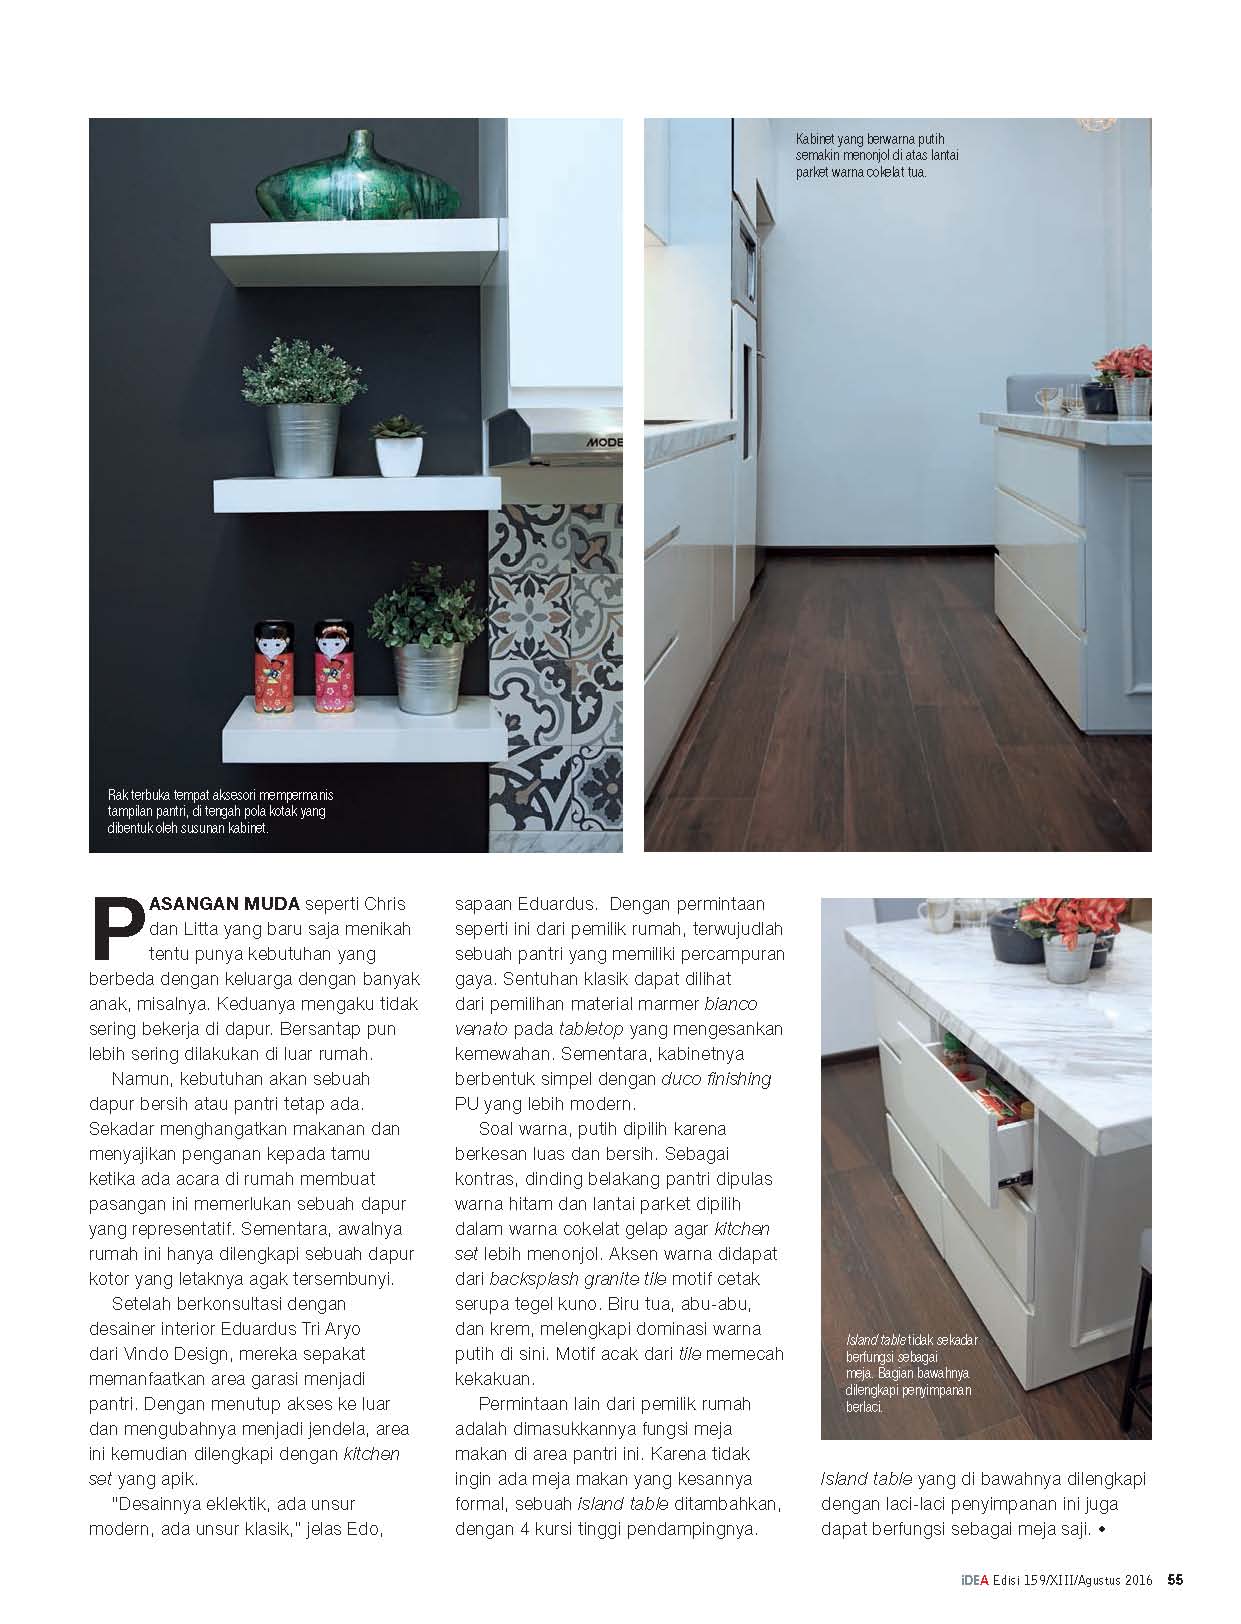 Simple Elegant Kitchen in iDEA Magazine